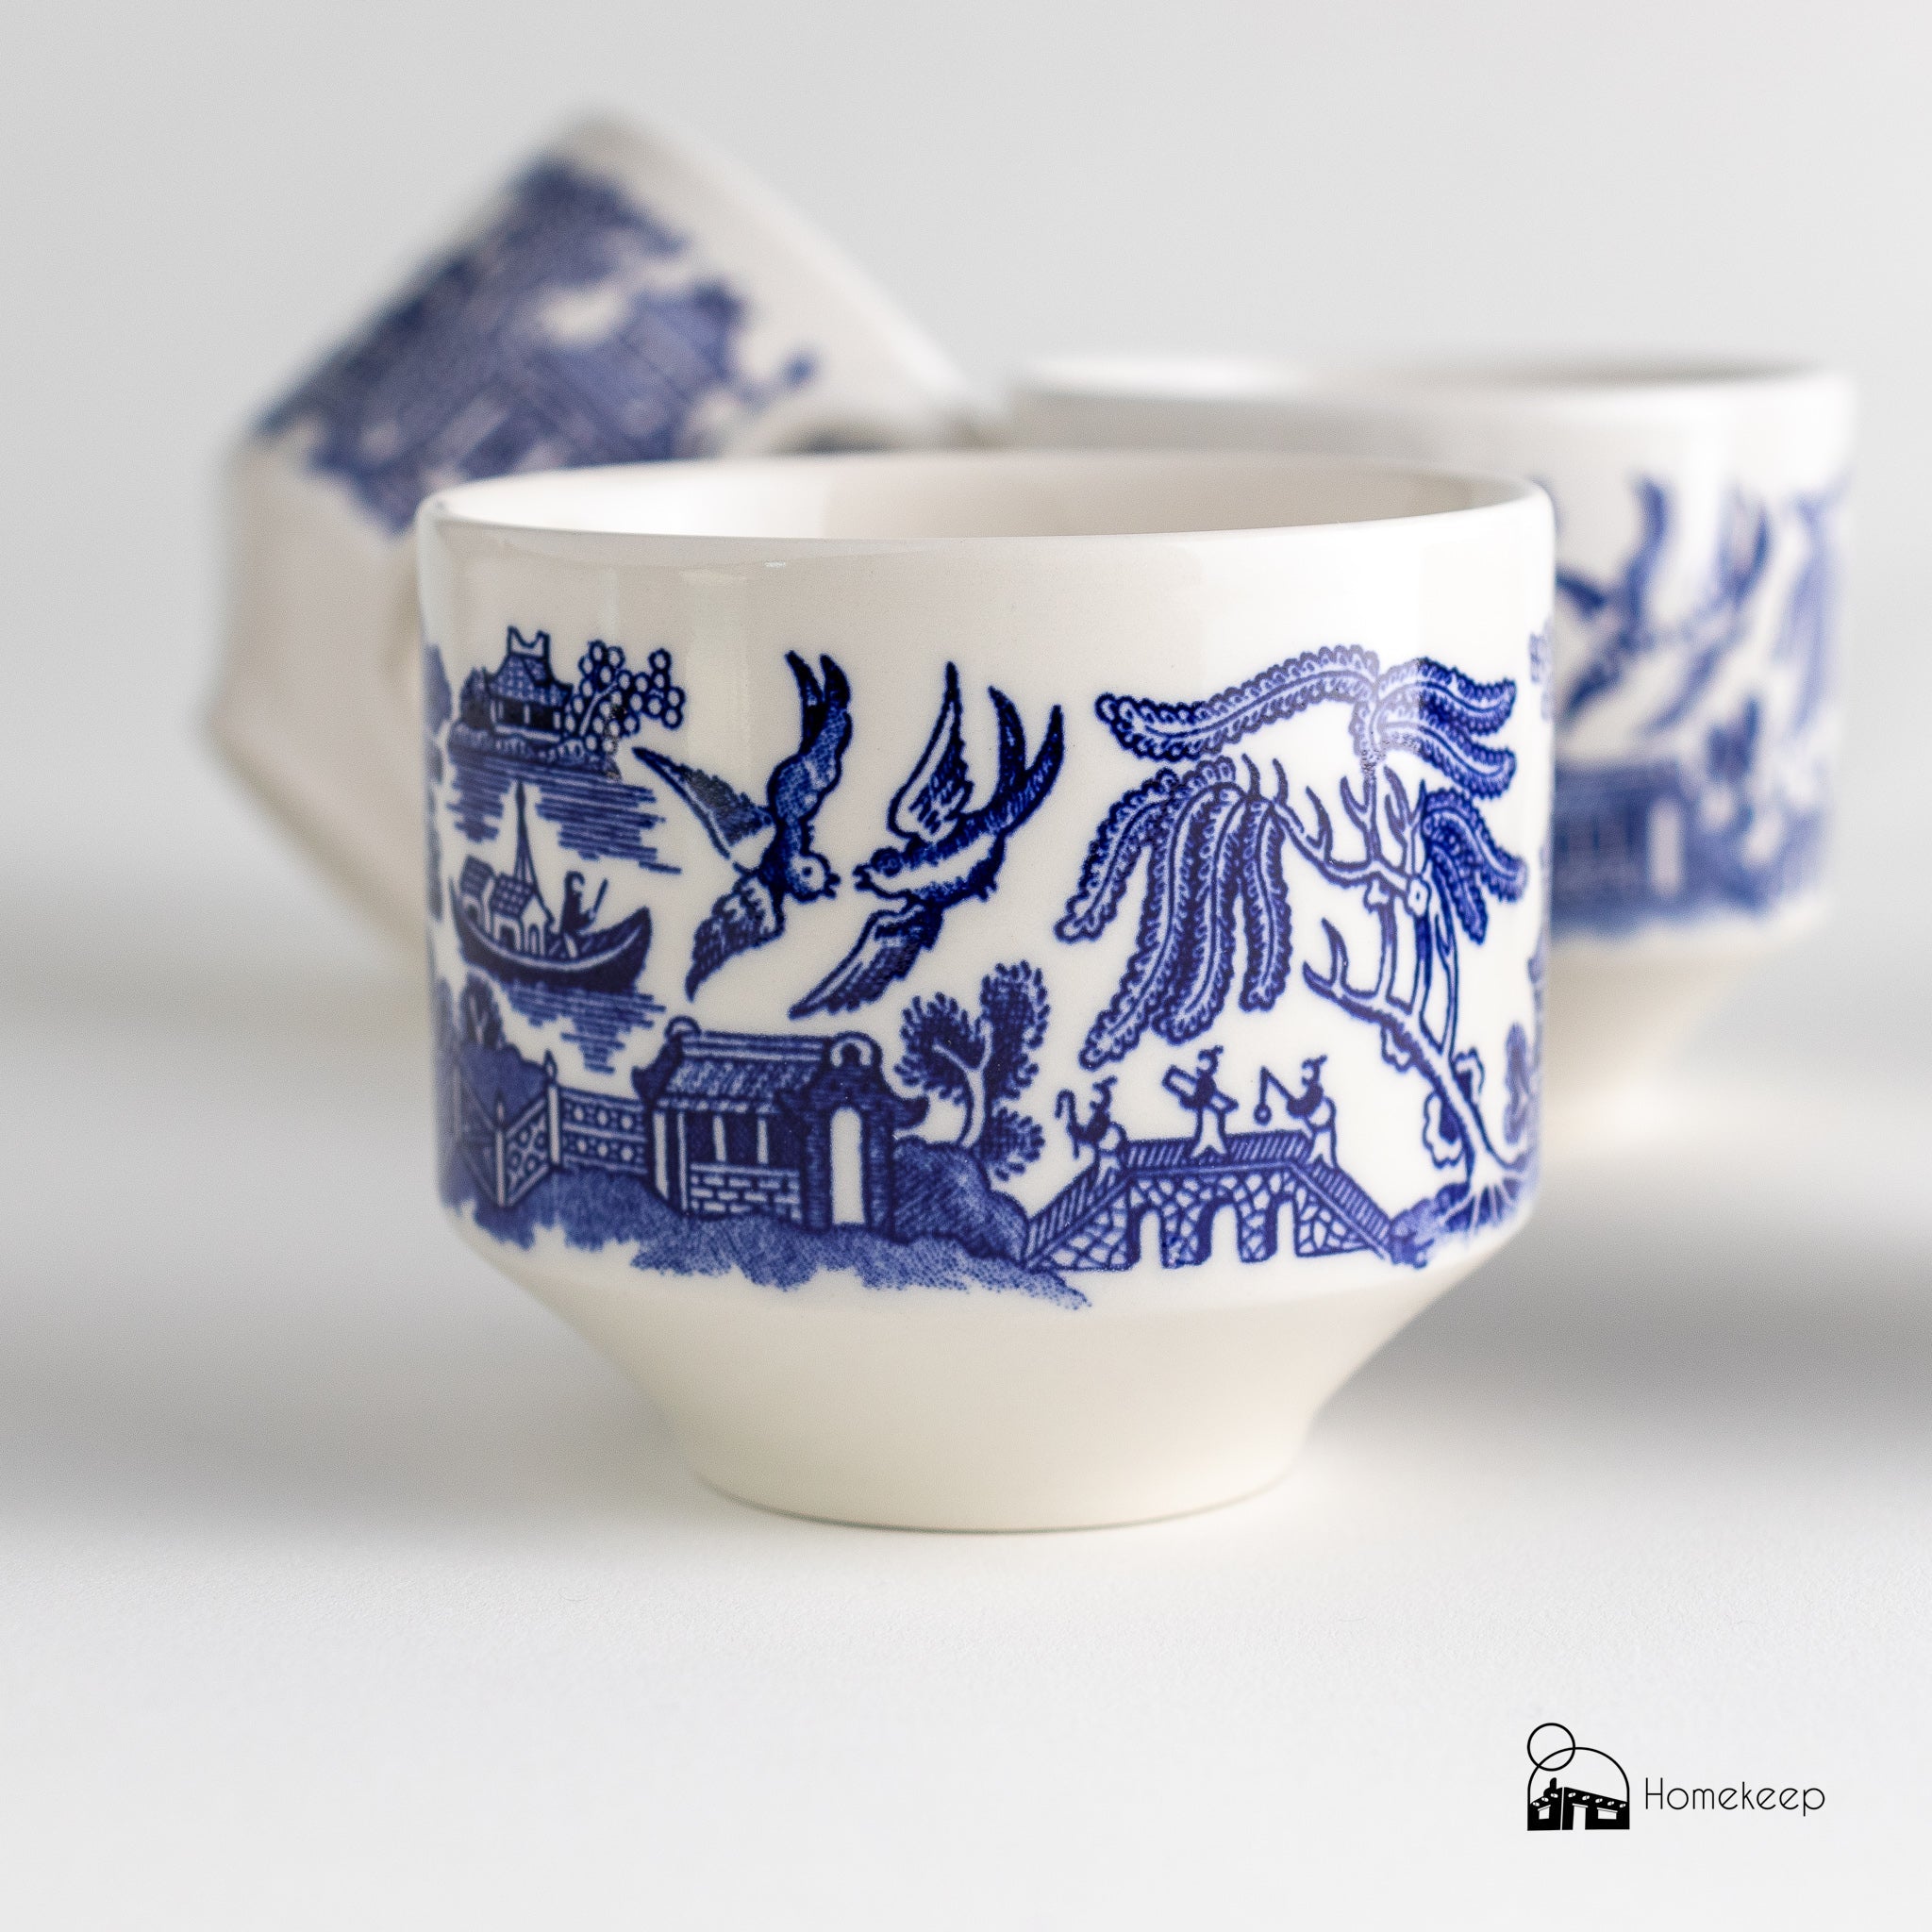 Set of Churchill Blue Willow Stacking Teacups - Homekeep Market